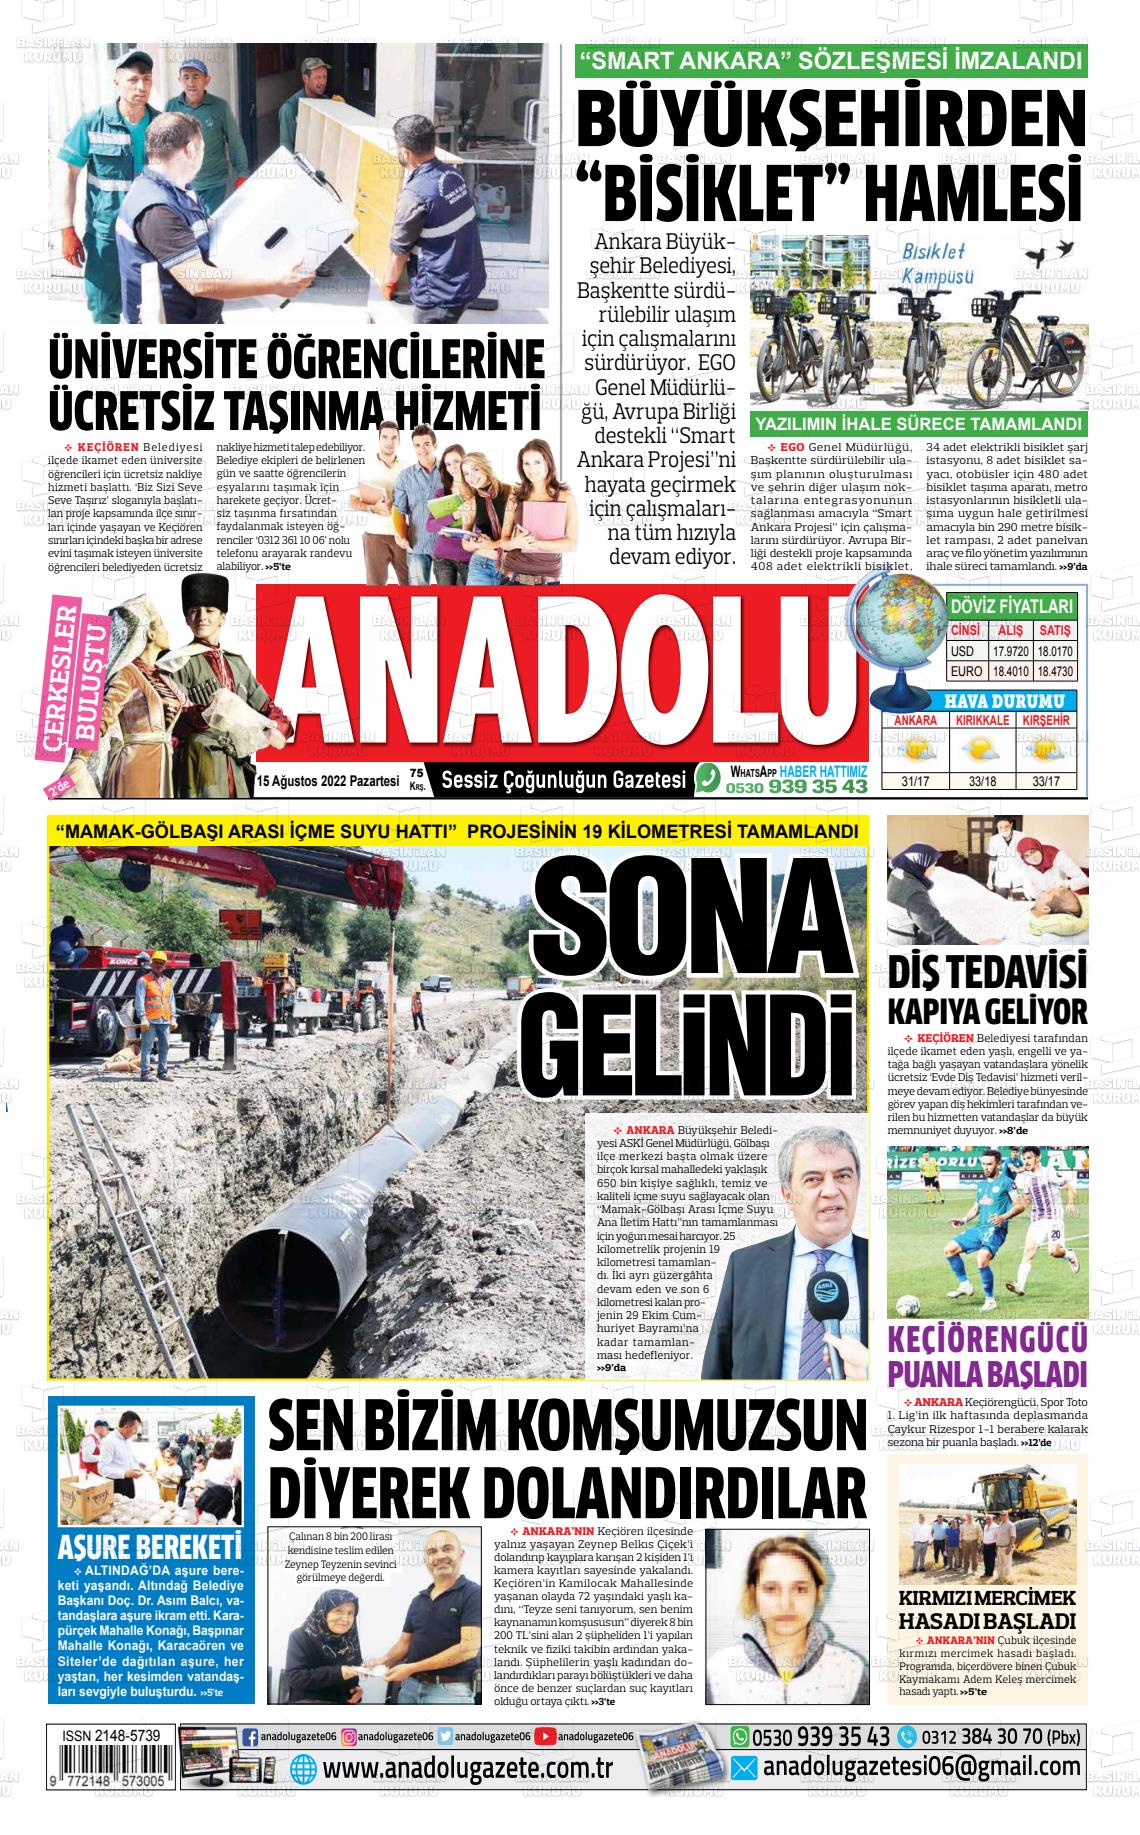 15 Ağustos 2022 Ankara Anadolu Gazete Manşeti